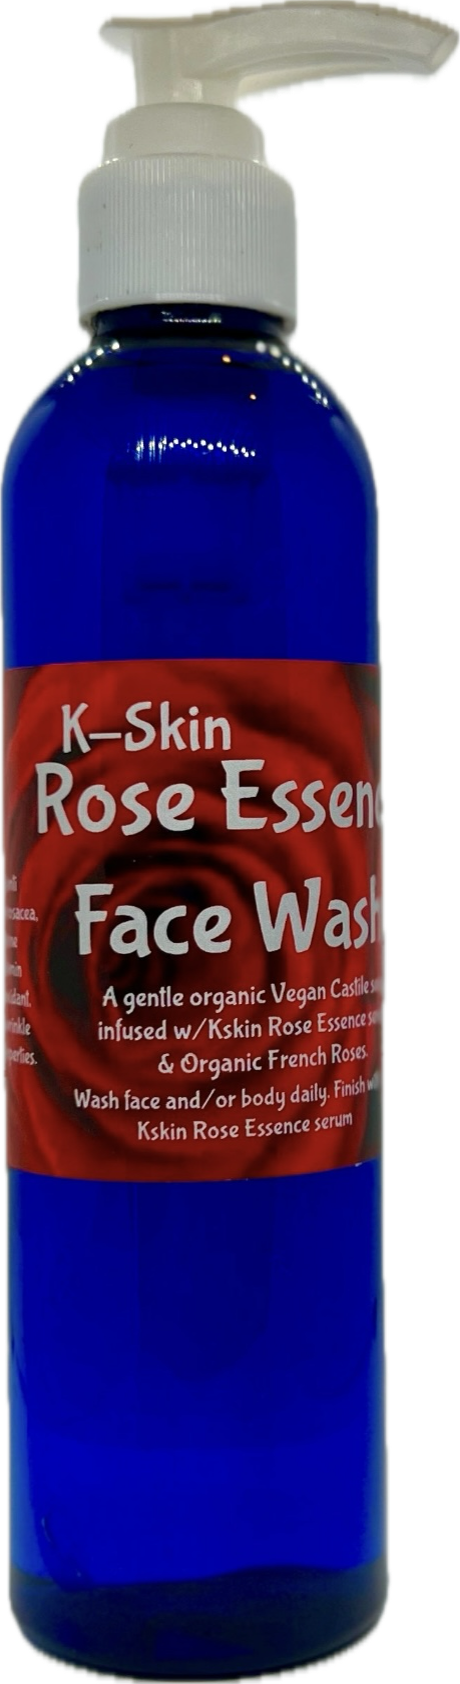 Rose Essence face wash